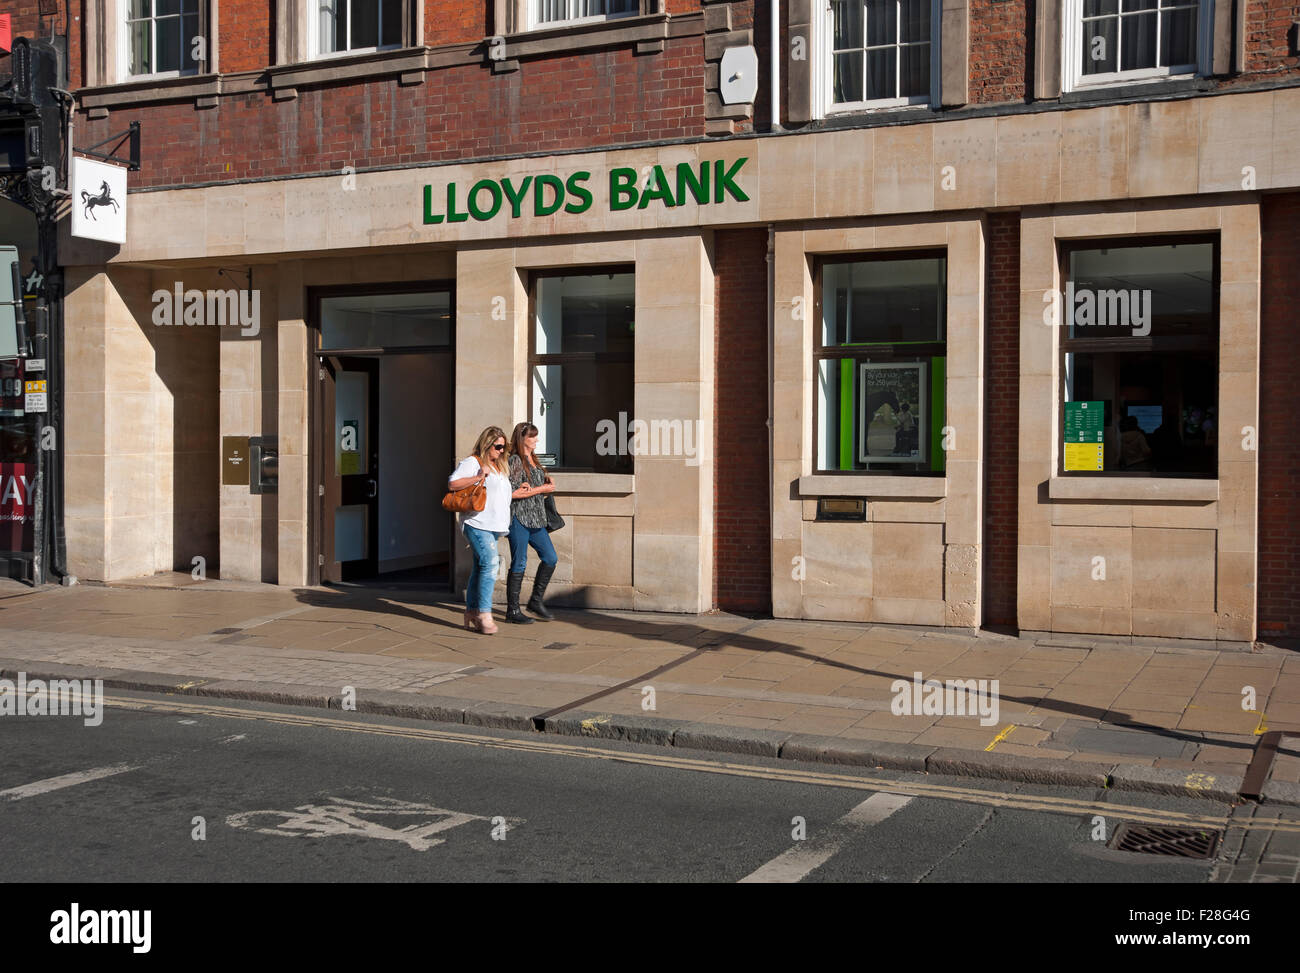 Lloyds Bank branch exterior Pavement York North Yorkshire England UK United Kingdom GB Great Britain Stock Photo